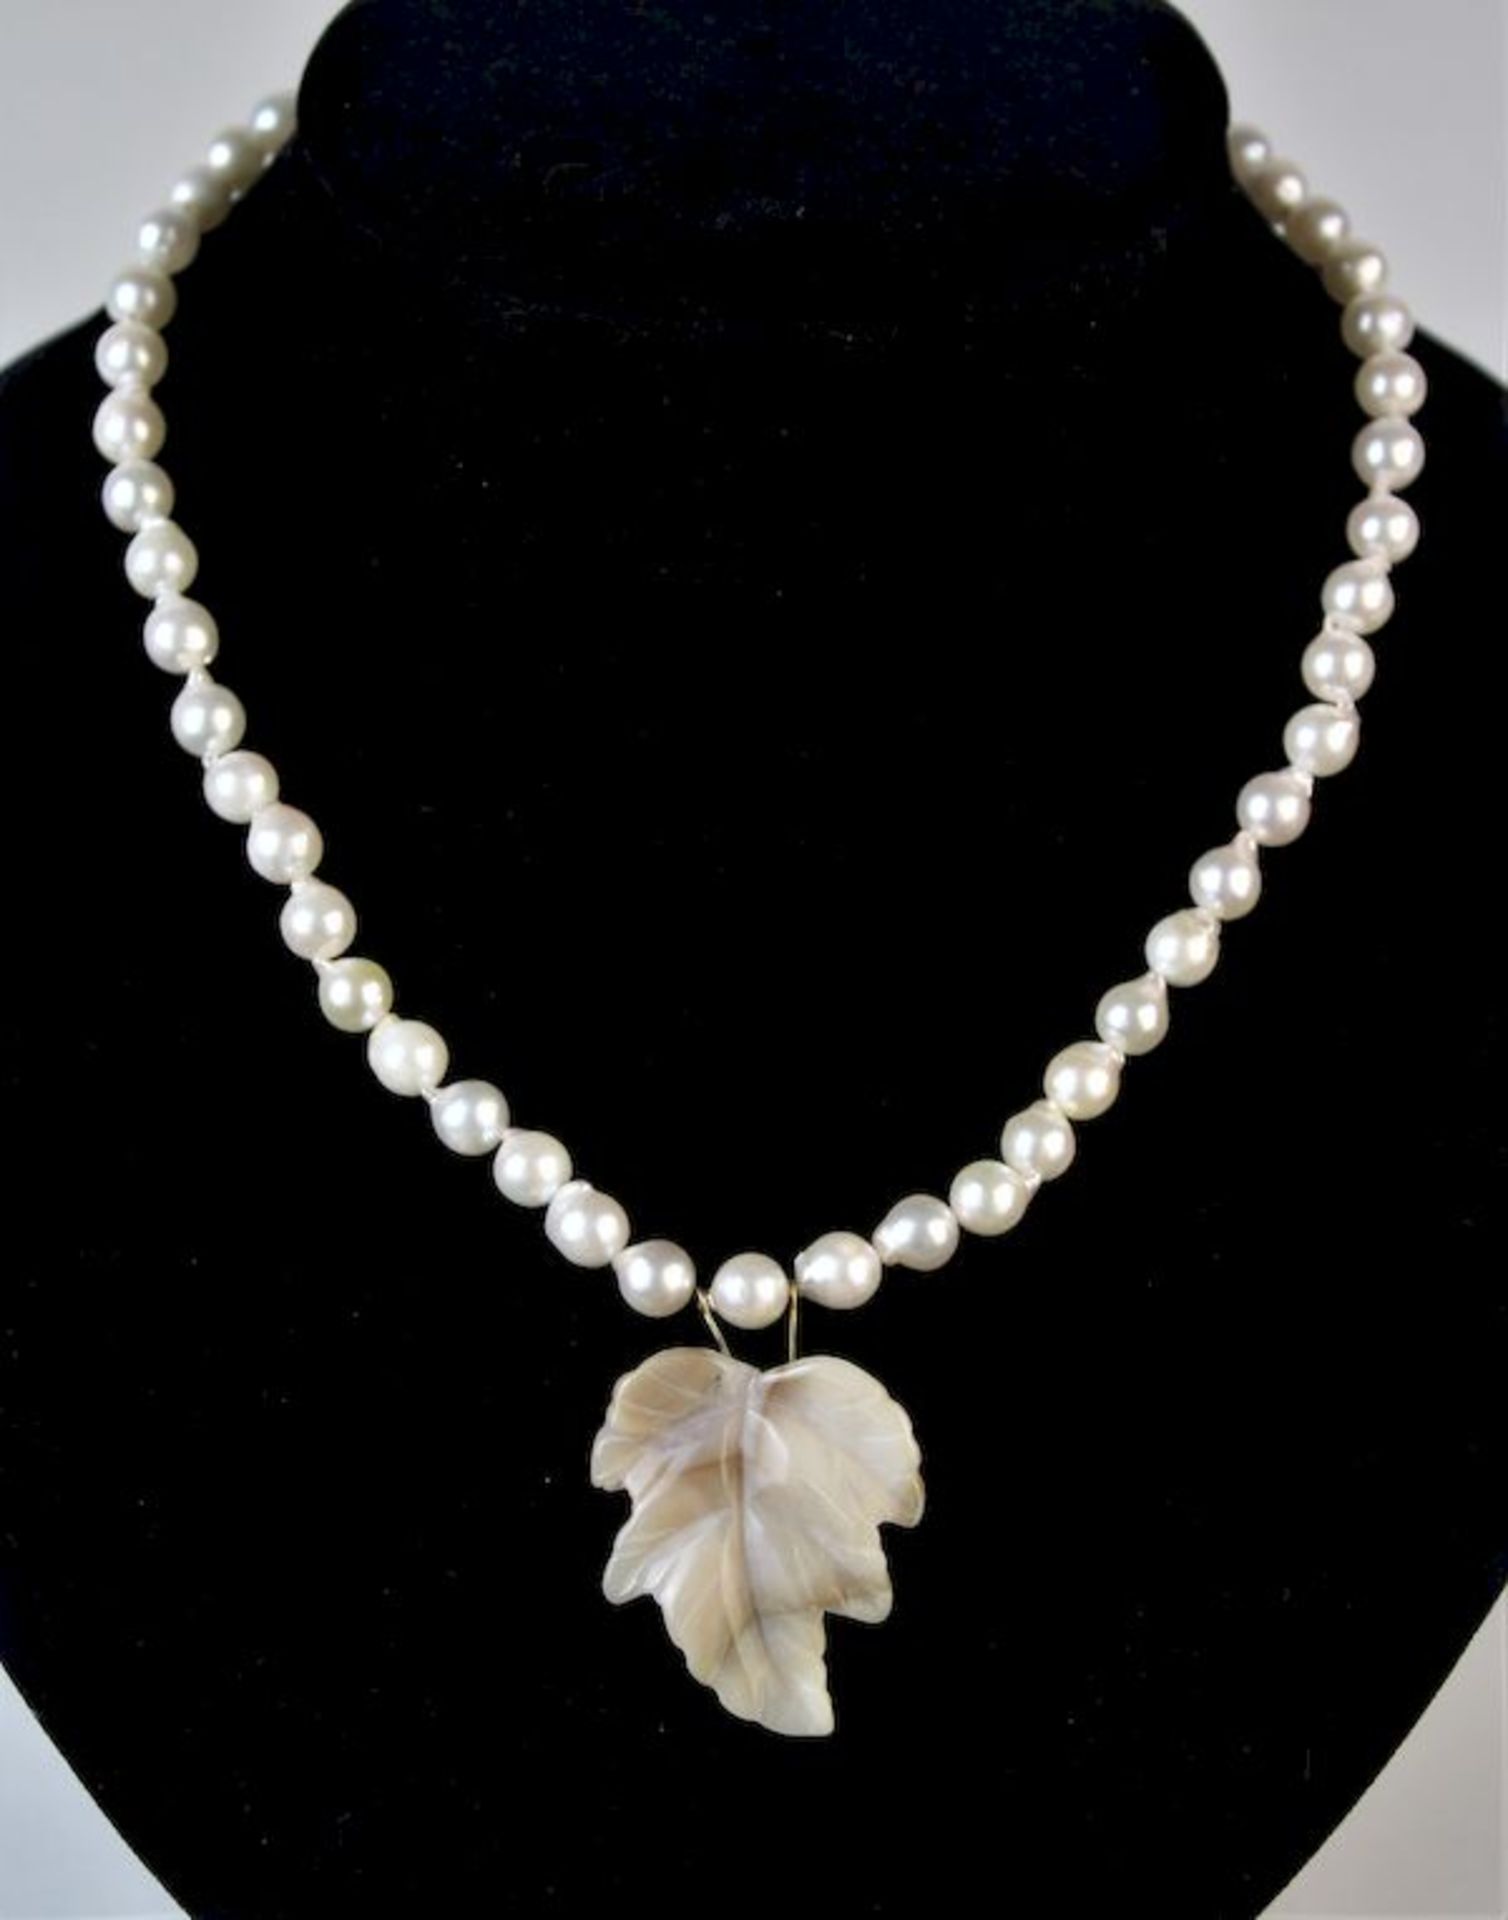 Rosa Opalblatt an Perlenkette, HandarbeitPerlenkette aus weißen Akoya Zuchtperlen mit vergoldeter